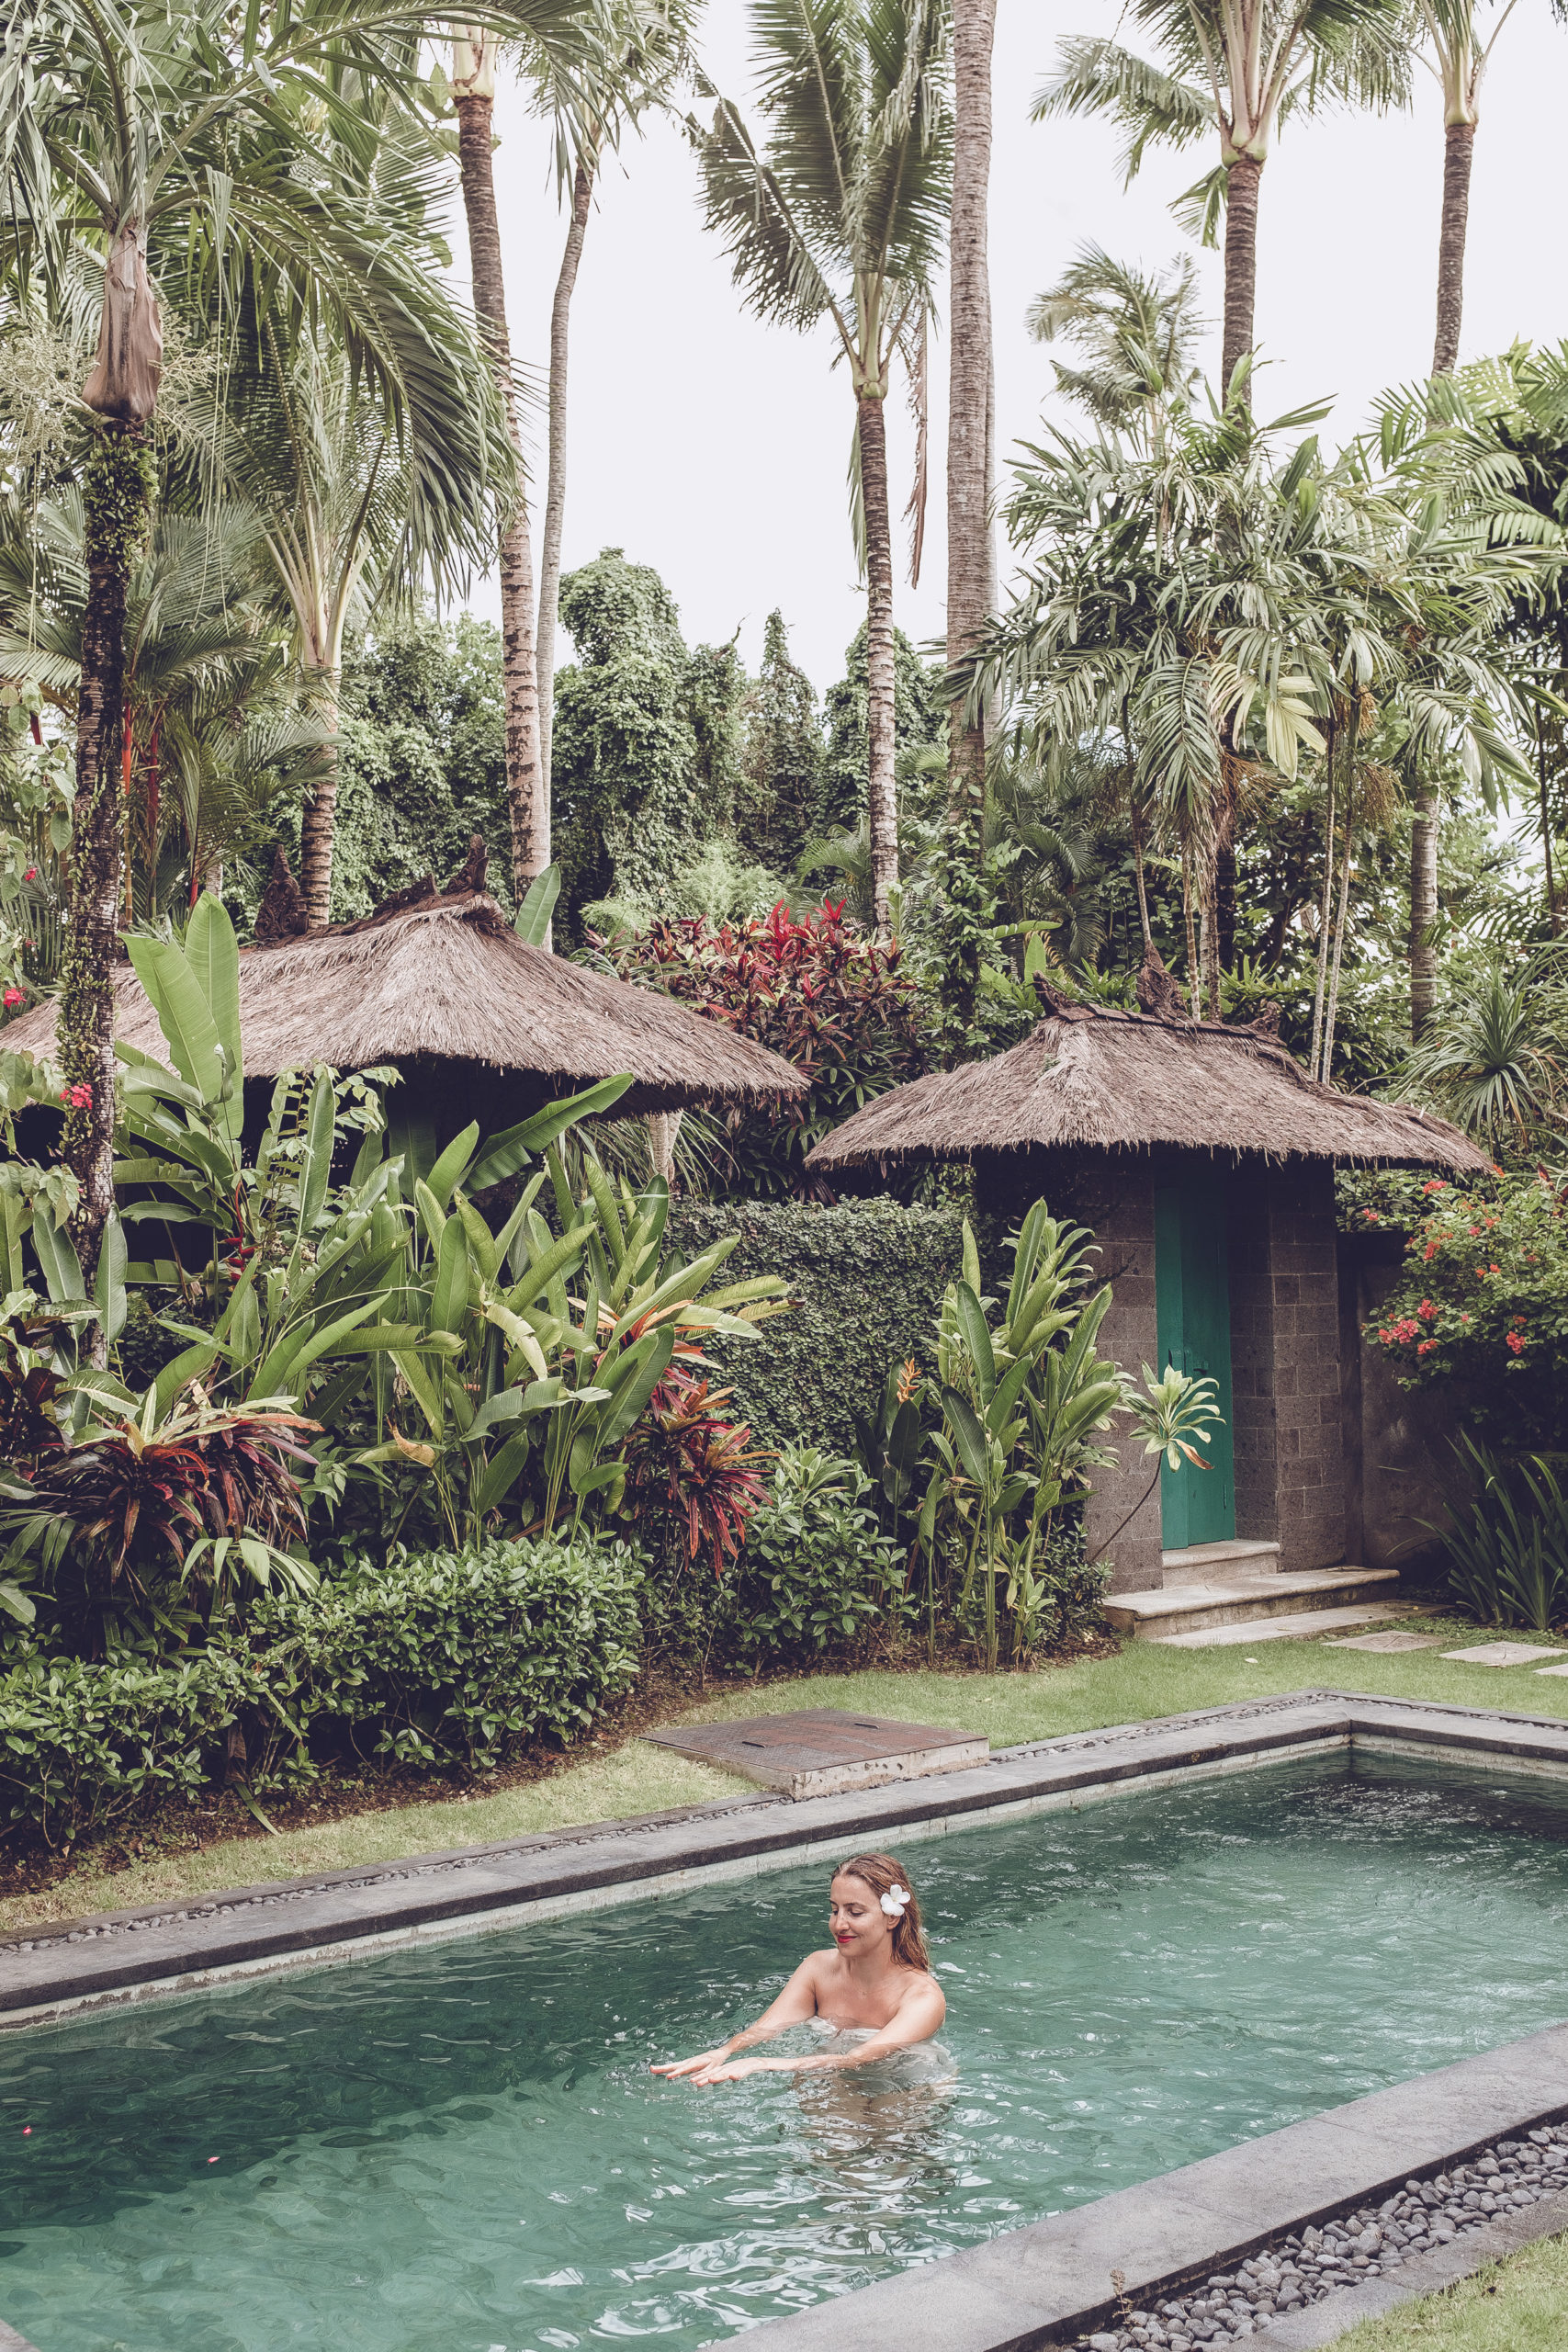 Sukhavati Ayurvedic Retreat and Spa in Bali 66